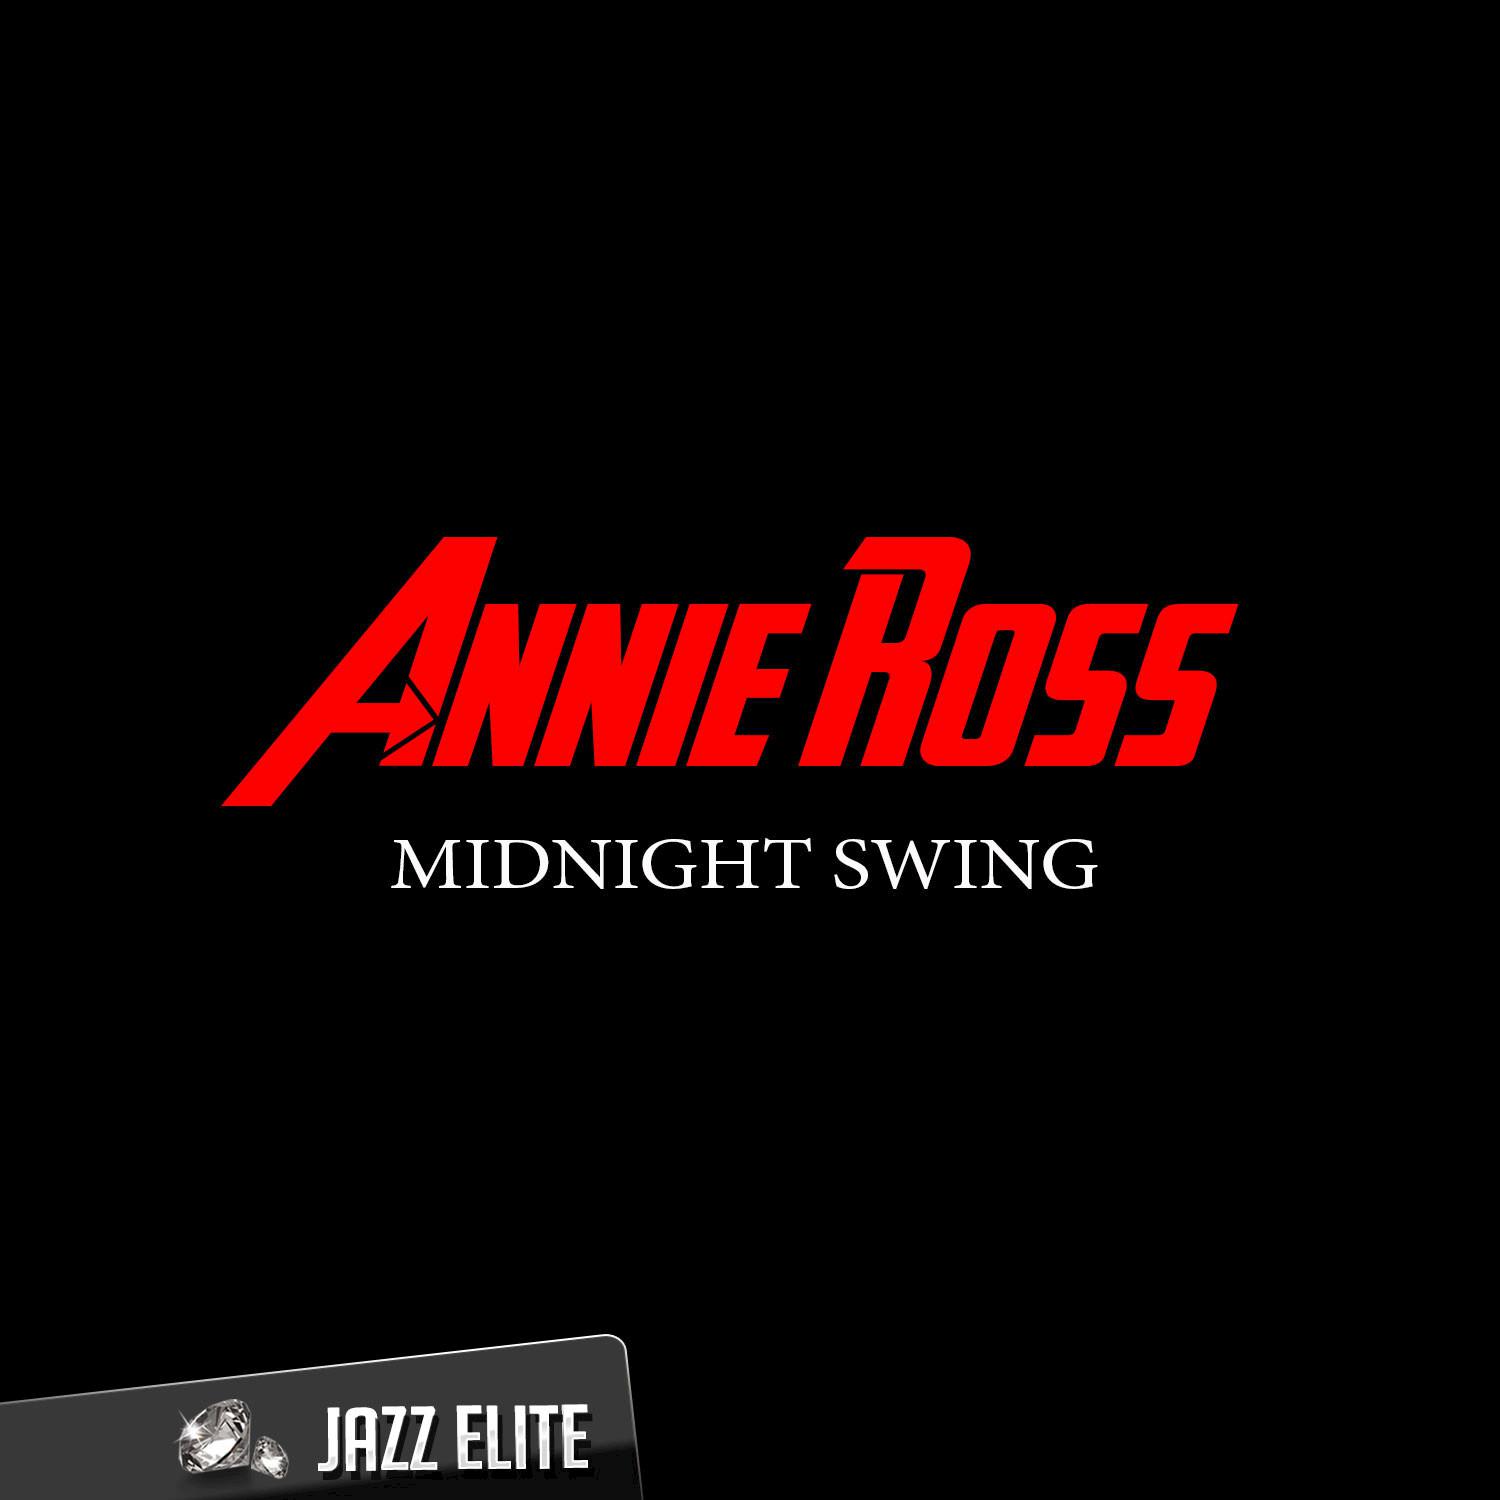 Midnight Swing